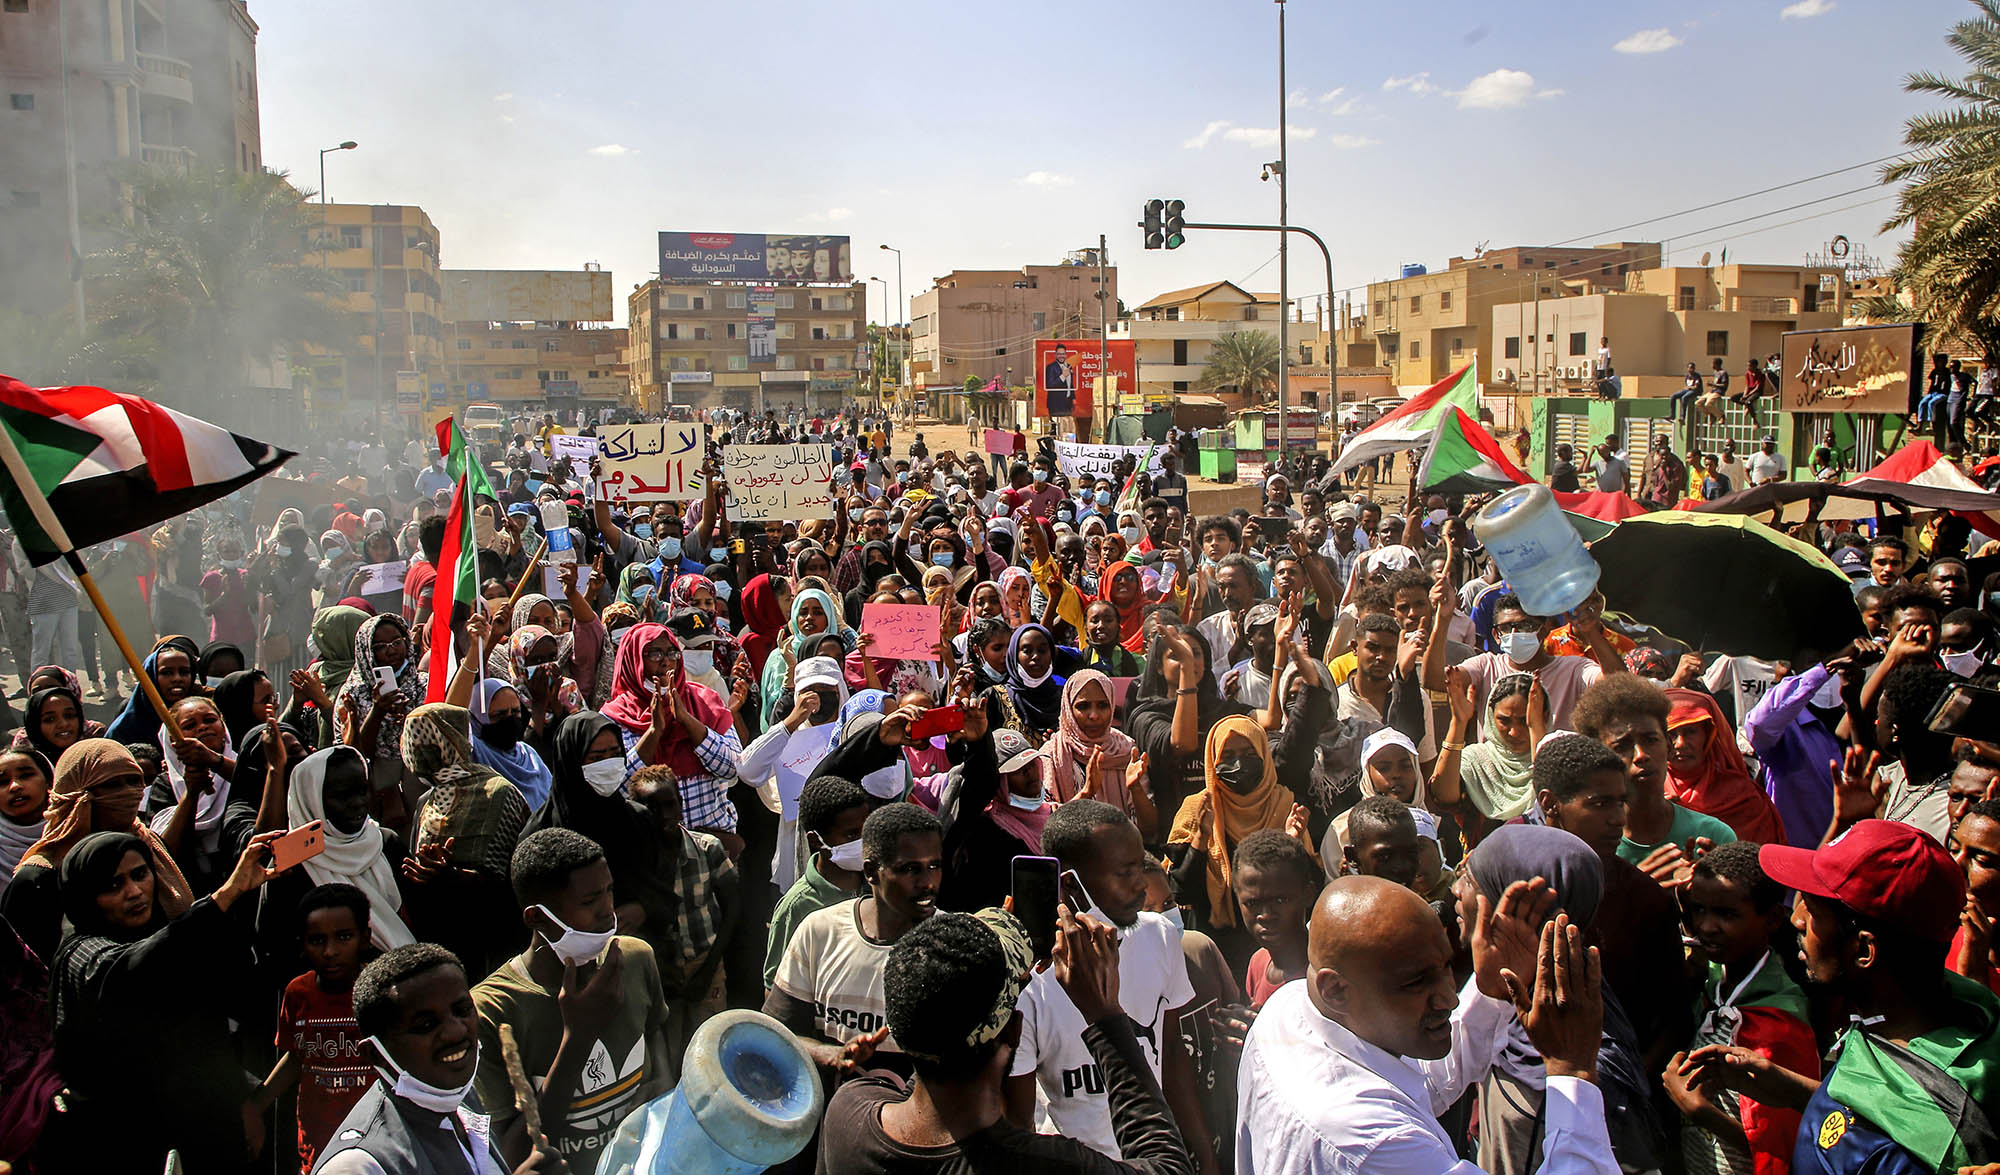 Khartoum coup